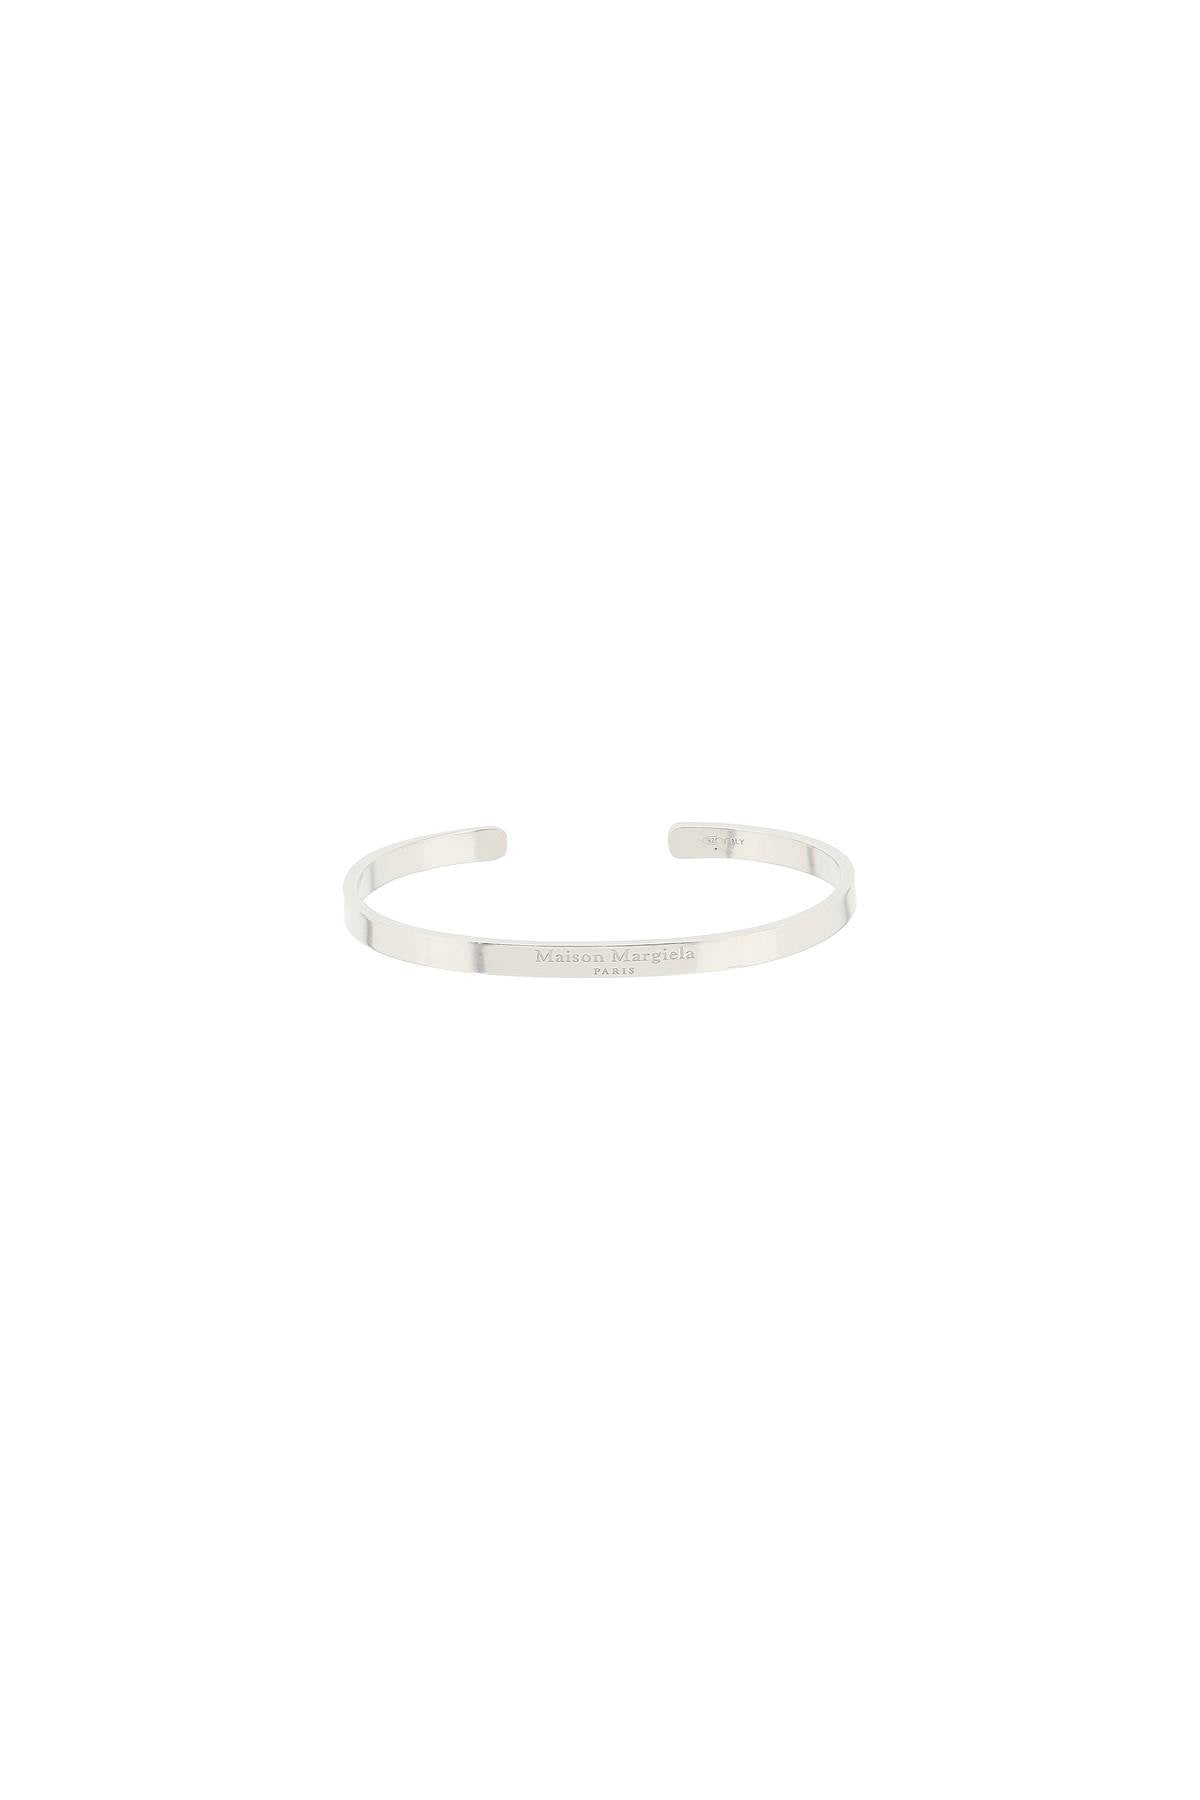 Maison margiela silver cuff bracelet-0